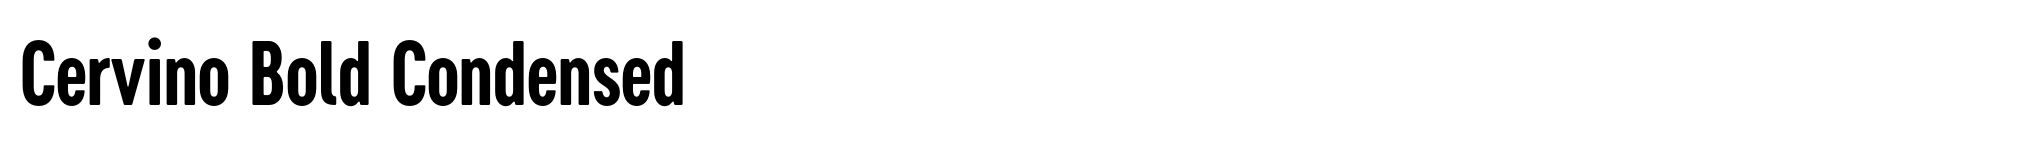 Cervino Bold Condensed image